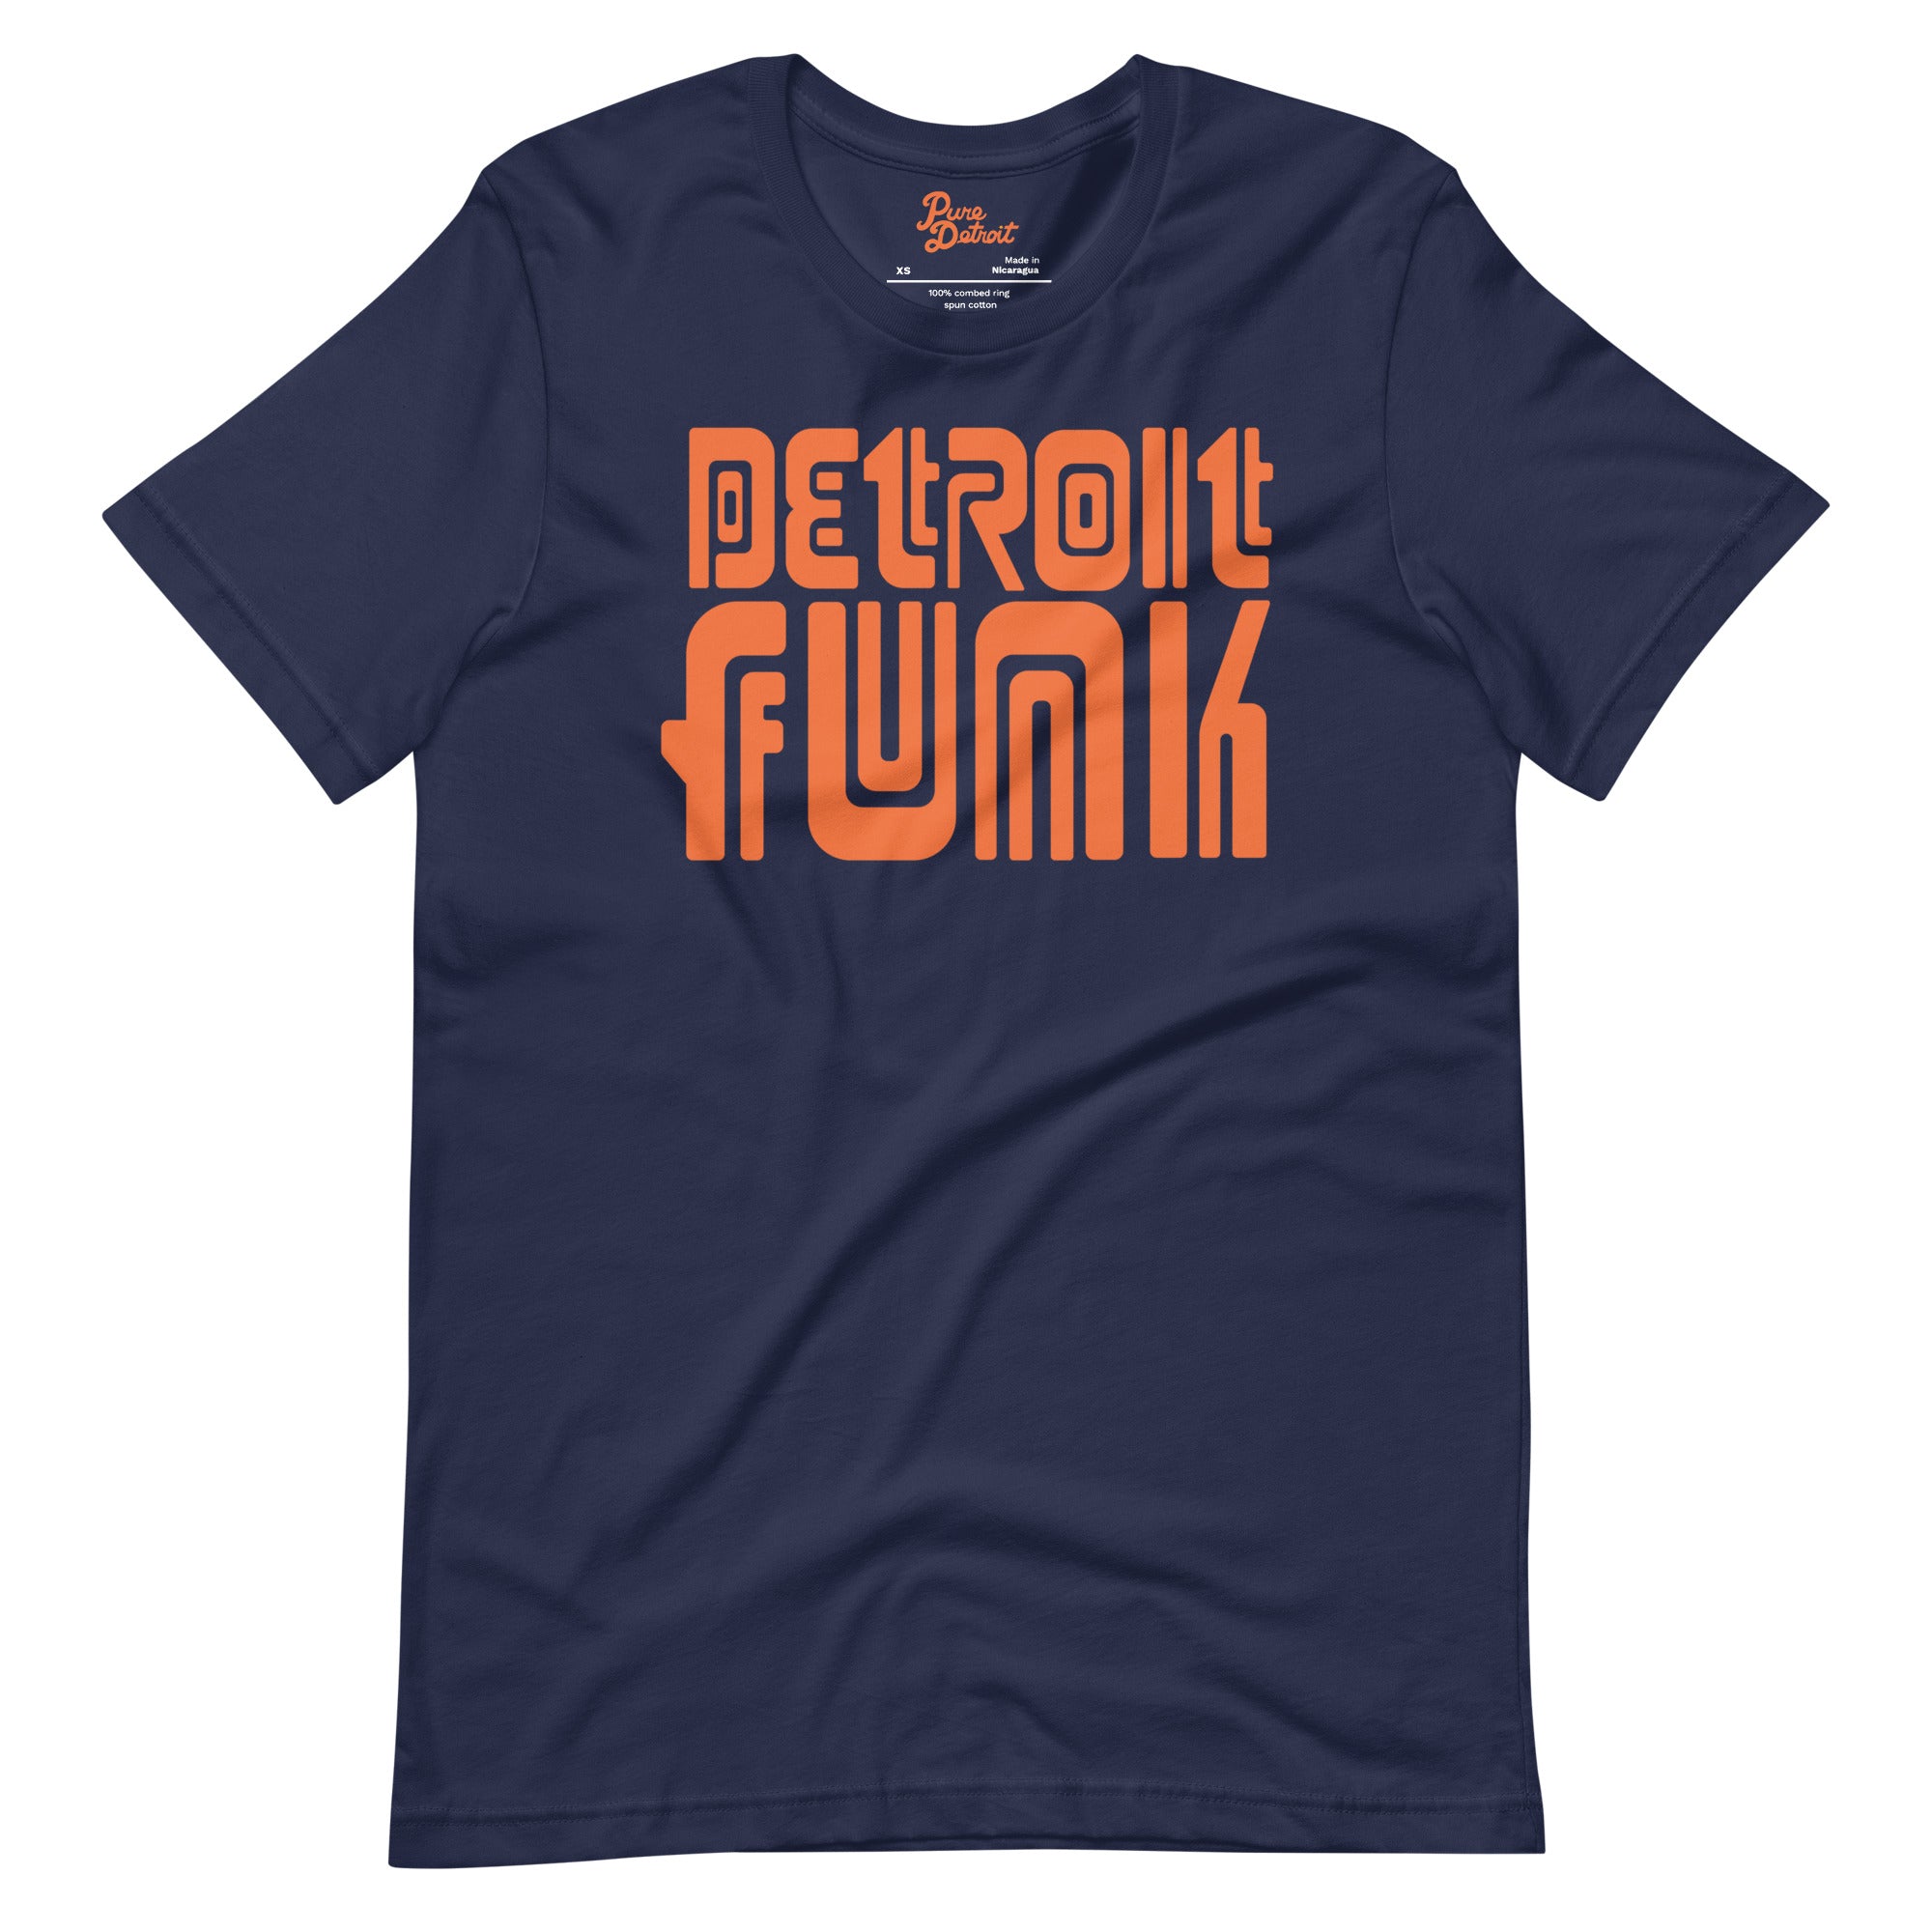 Detroit Funk Unisex T-shirt - Navy / Orange Unisex Apparel XS  